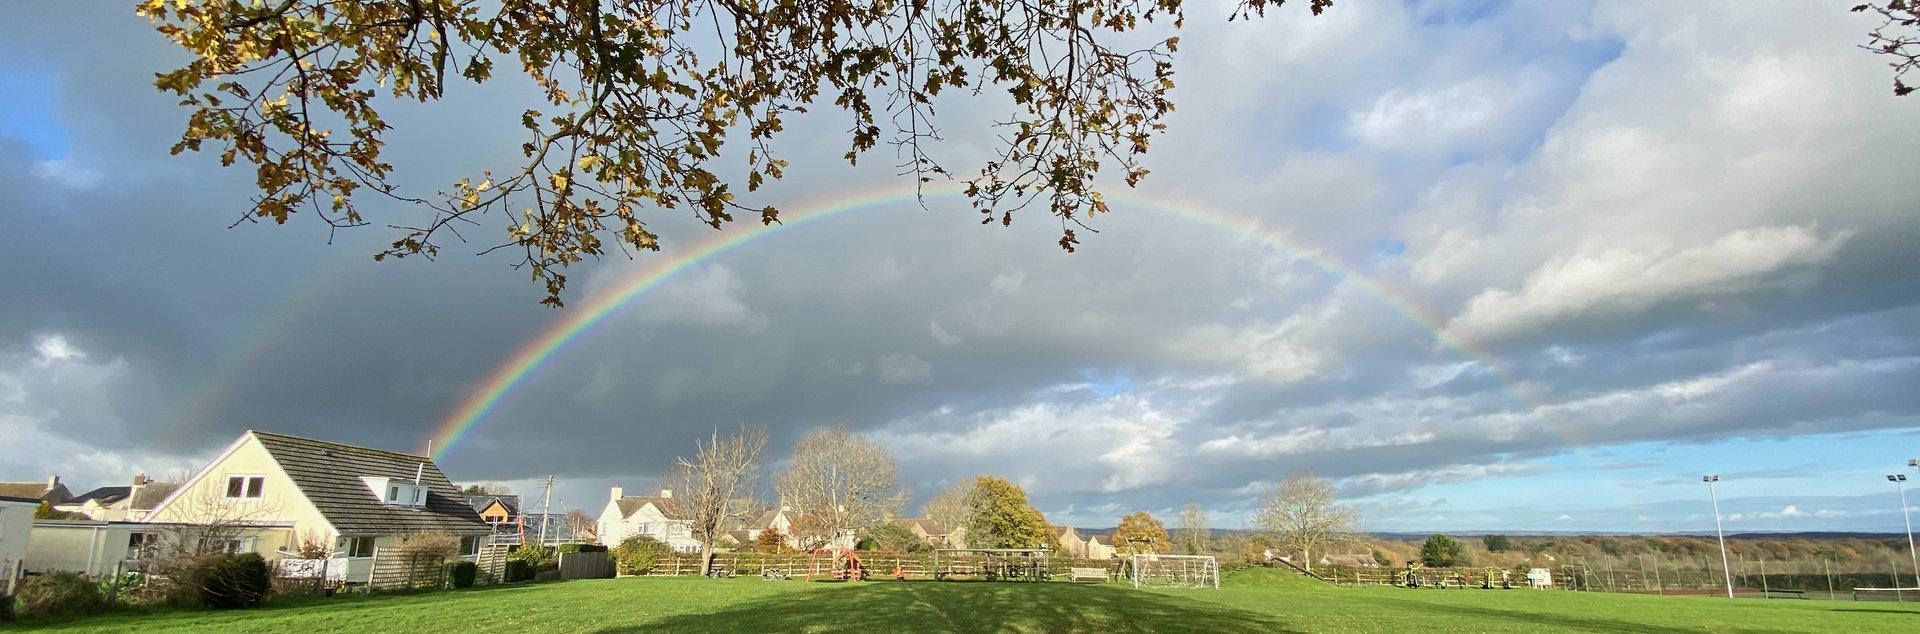 Rainbow over Ashill recreation ground